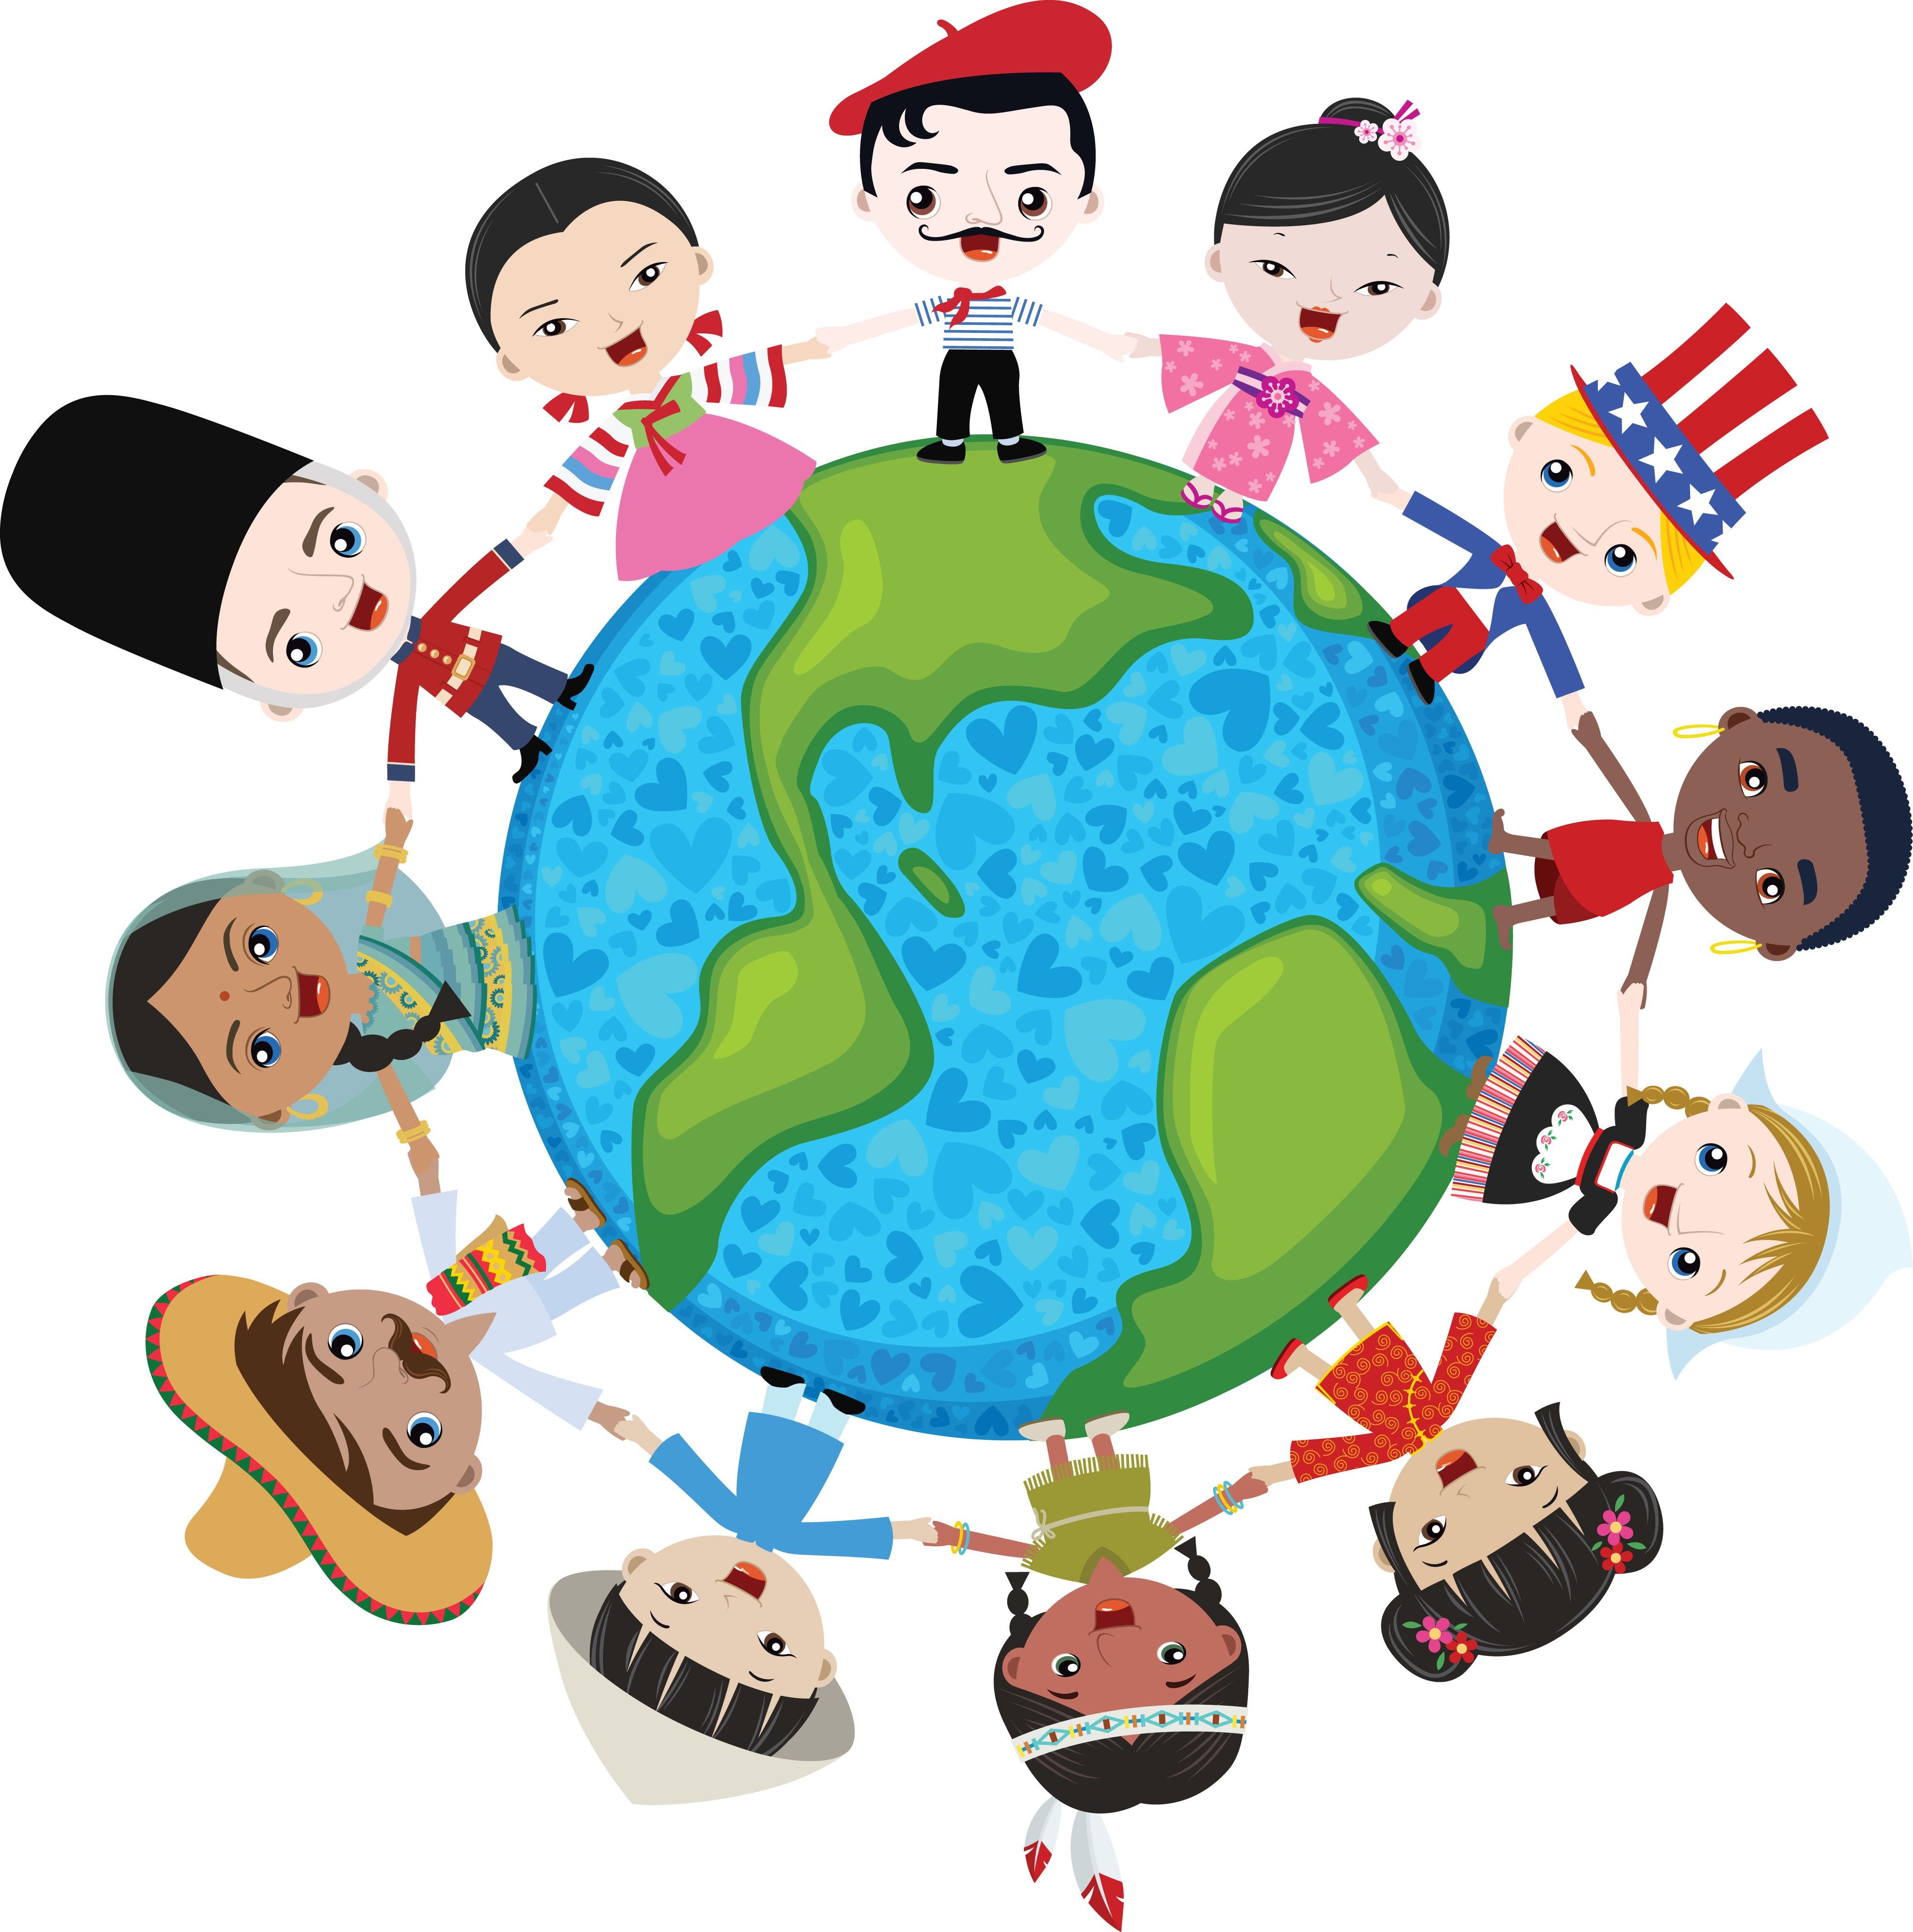 Cultures around. Дружба народов на земном шаре. Дети на земном шаре. Разные нации на земном шаре. Дети разных народов вокруг земного шара.